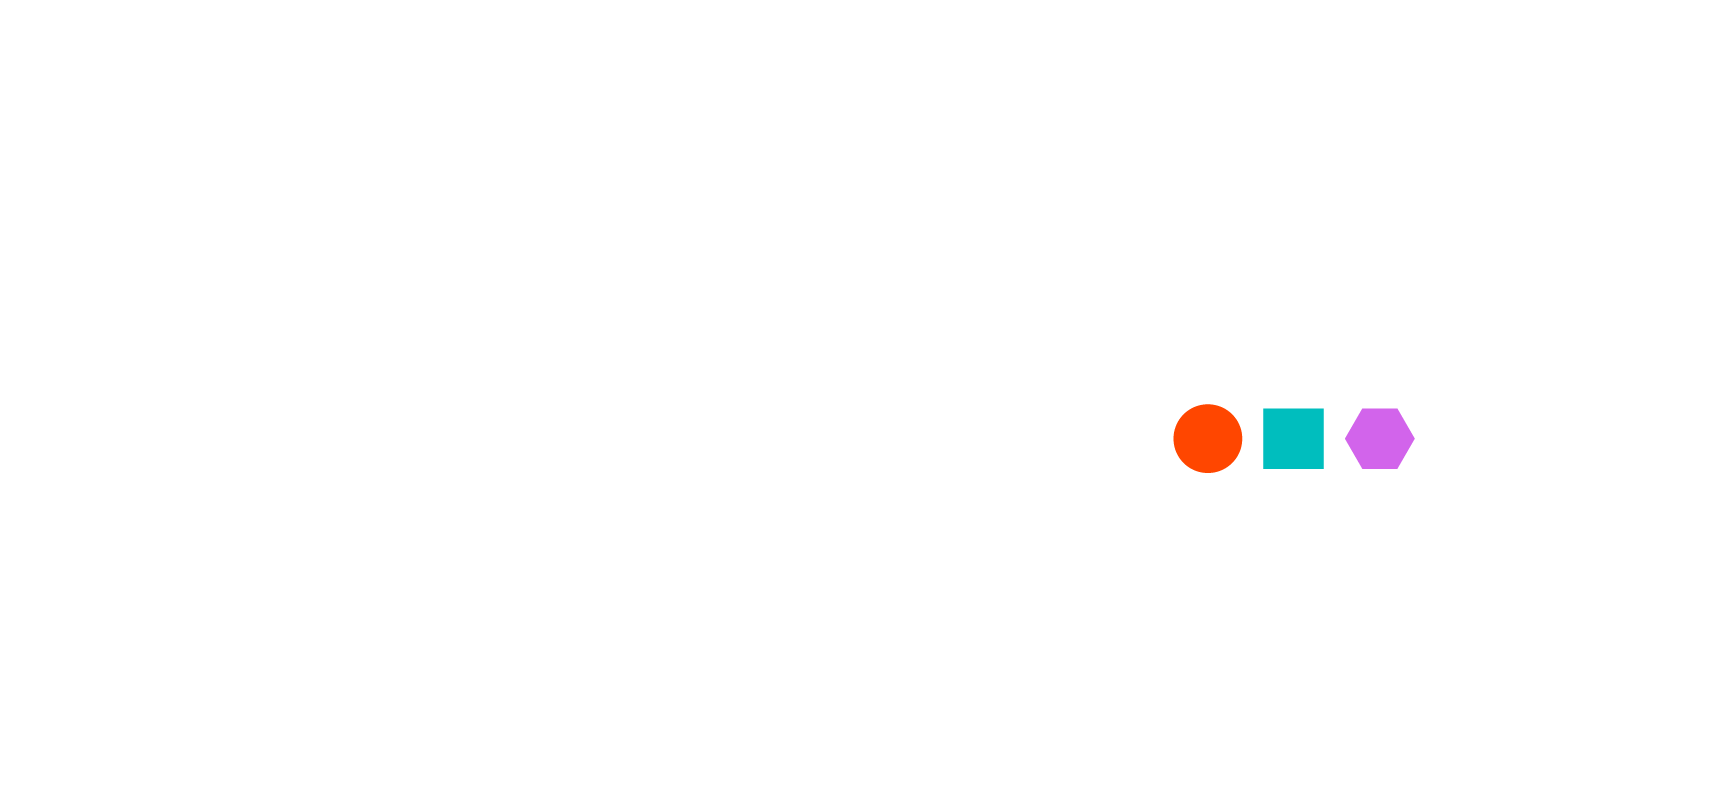 CCSD